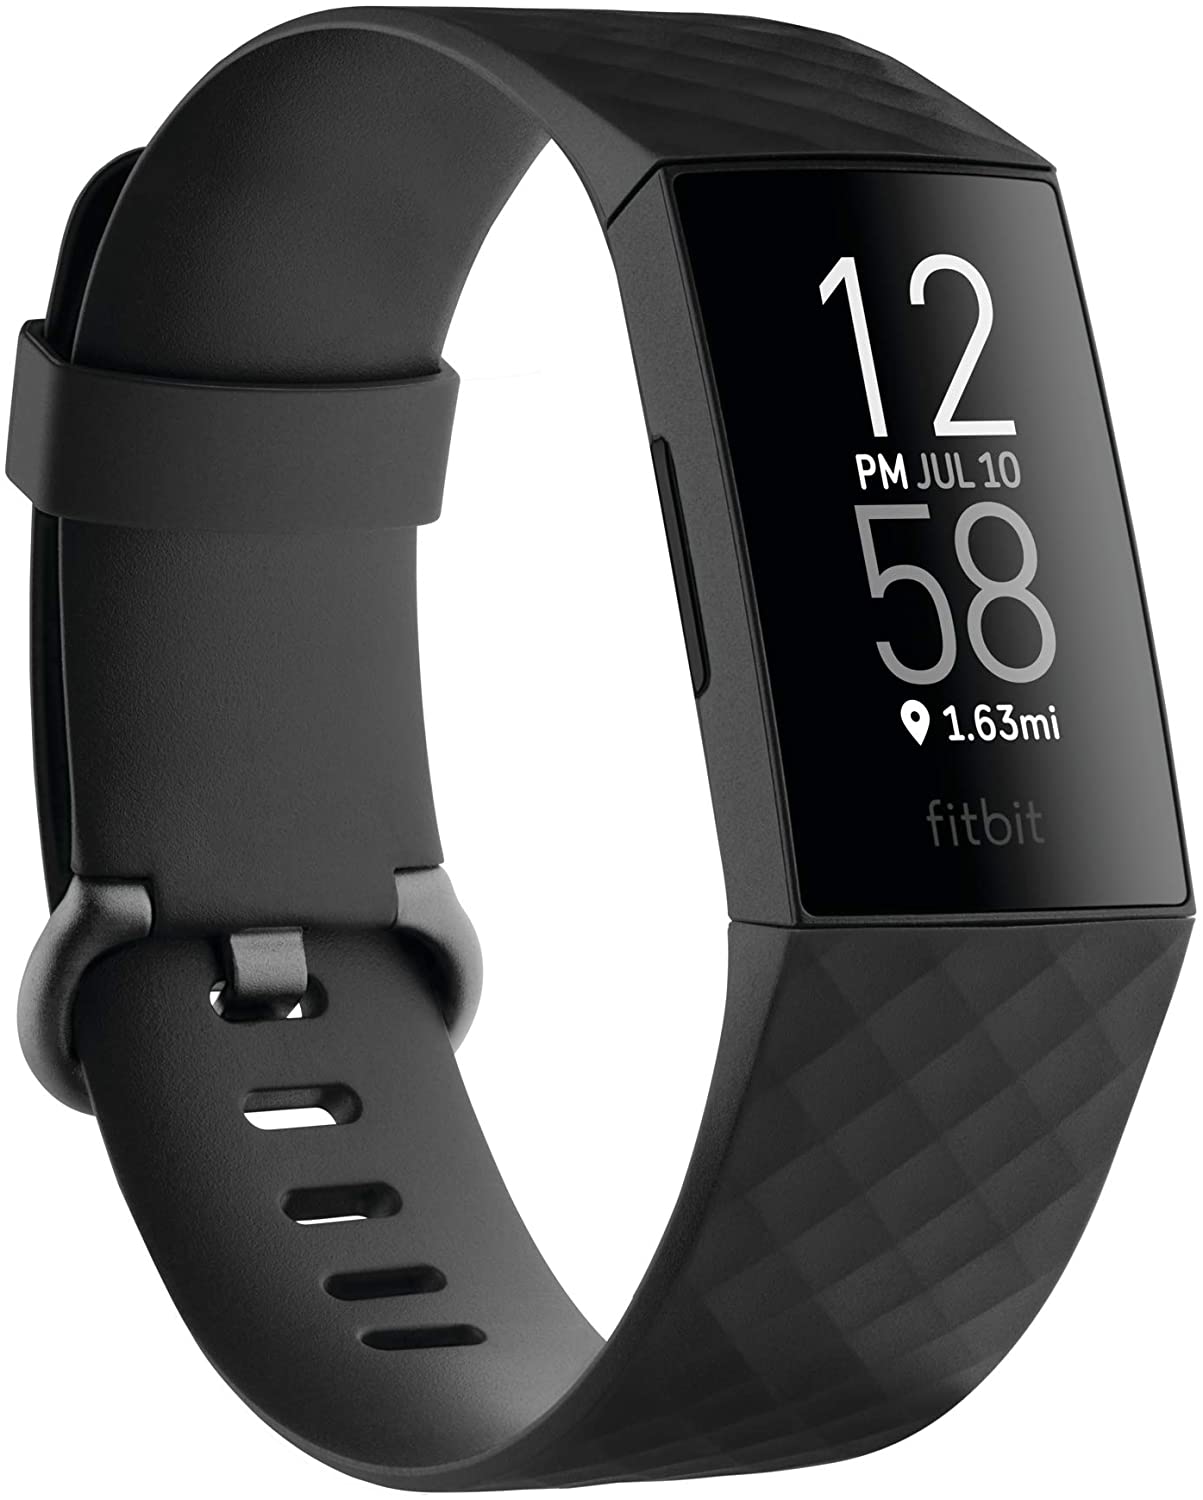 fitbit charge 4 minimalist design gps watch